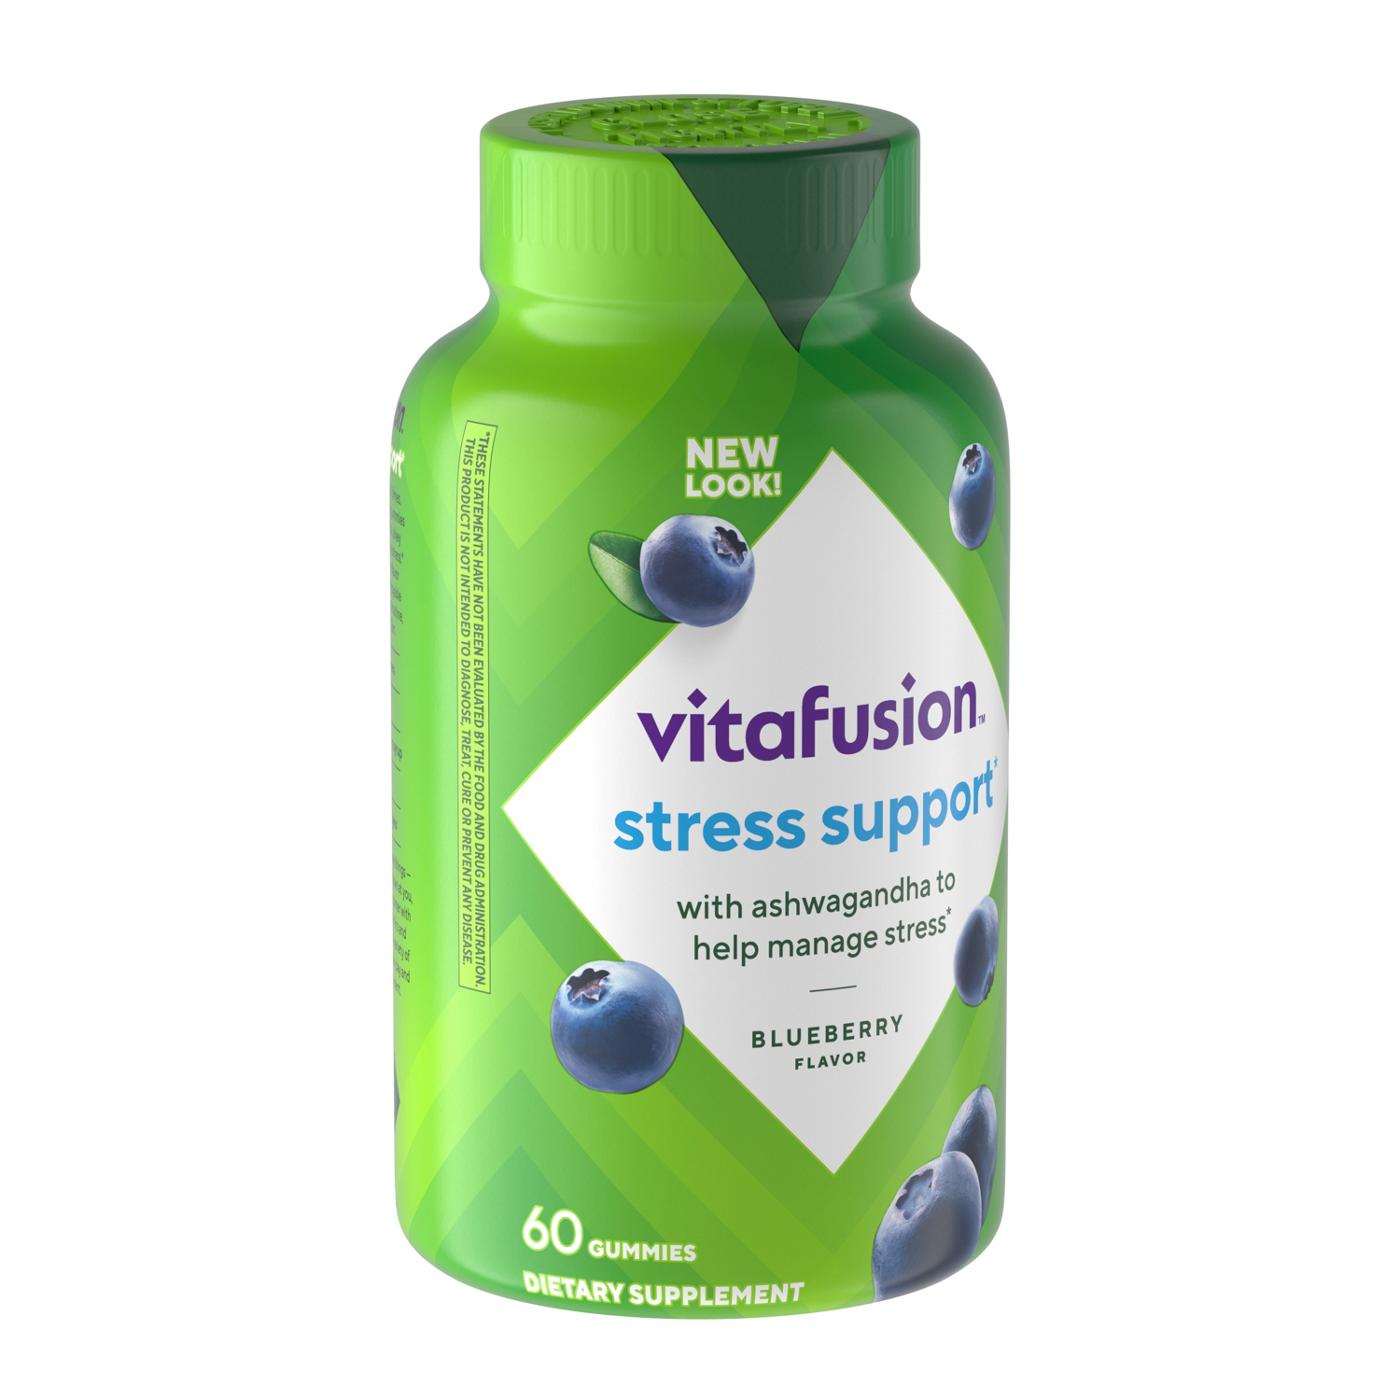 Vitafuson Stress Support Ashwagandha Gummies - Blueberry; image 6 of 6